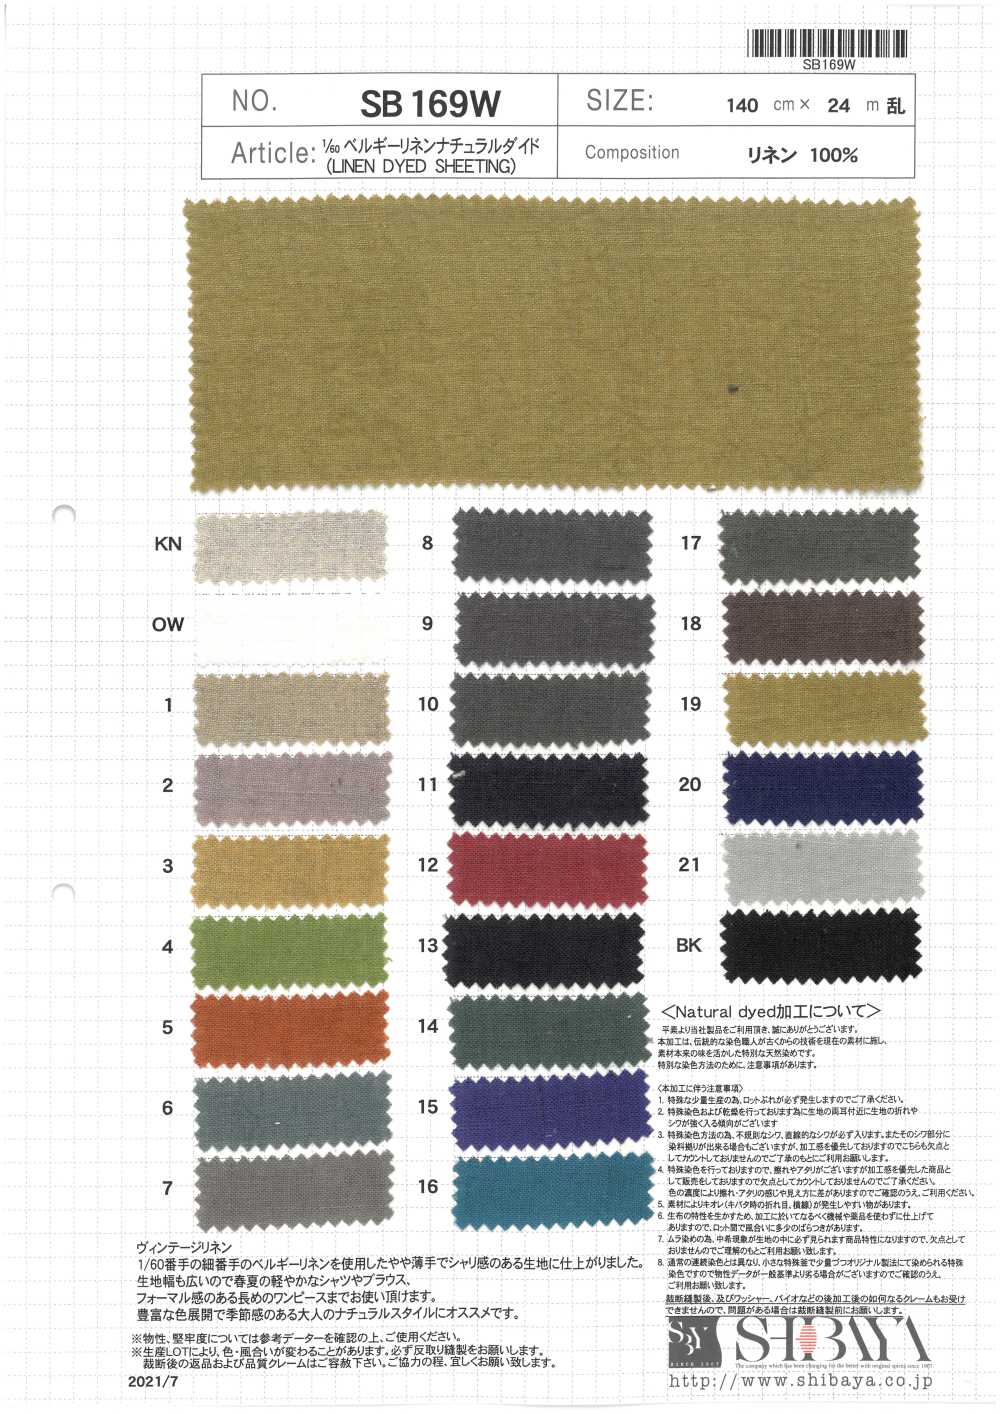 SB169W 1/60 Belgian Linen Natural Dyeing[Textile / Fabric] SHIBAYA